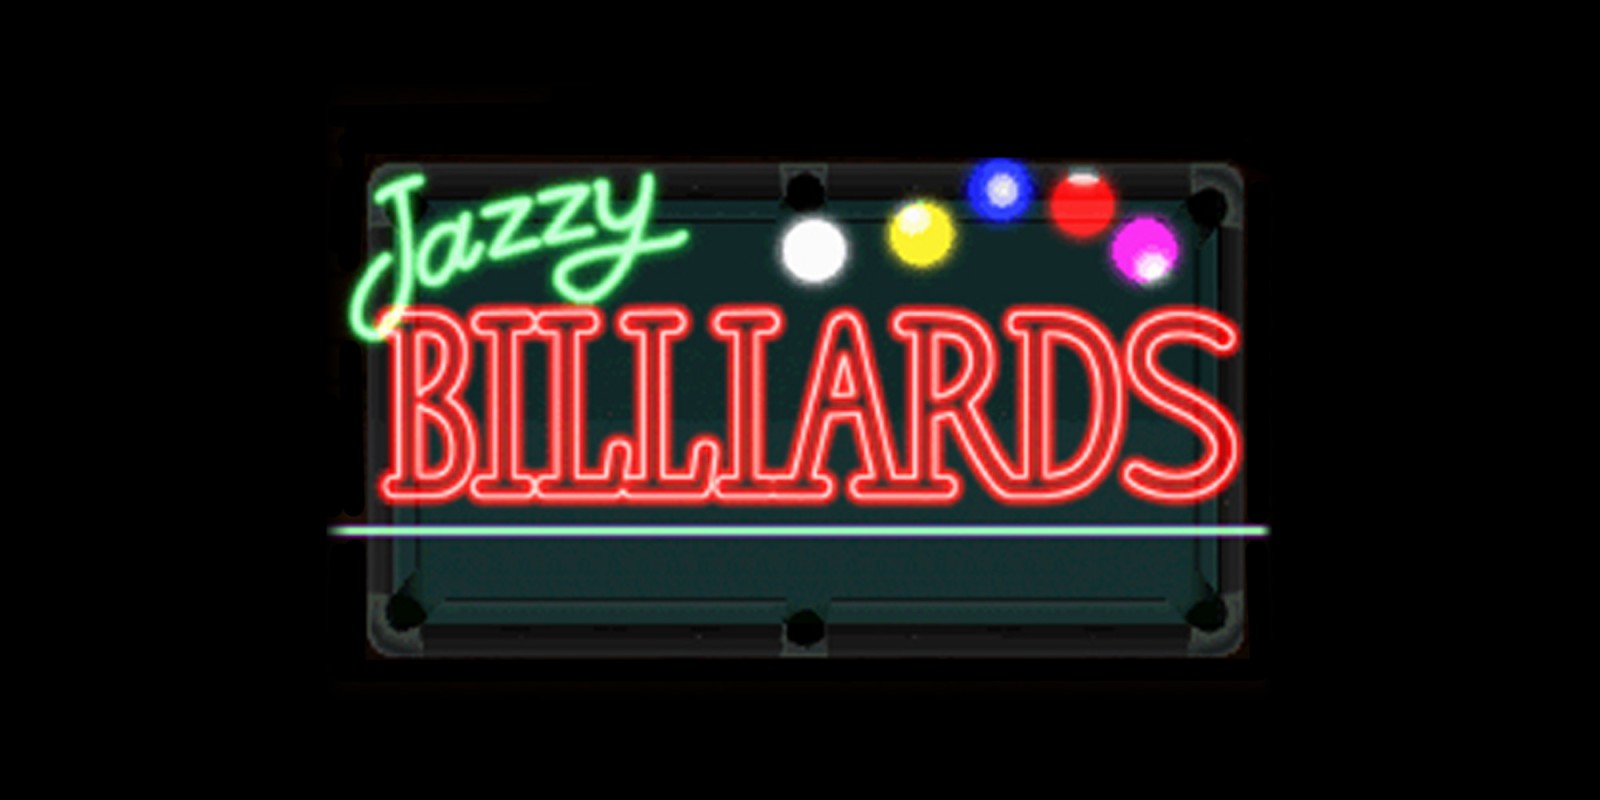 Jazzy Billiards